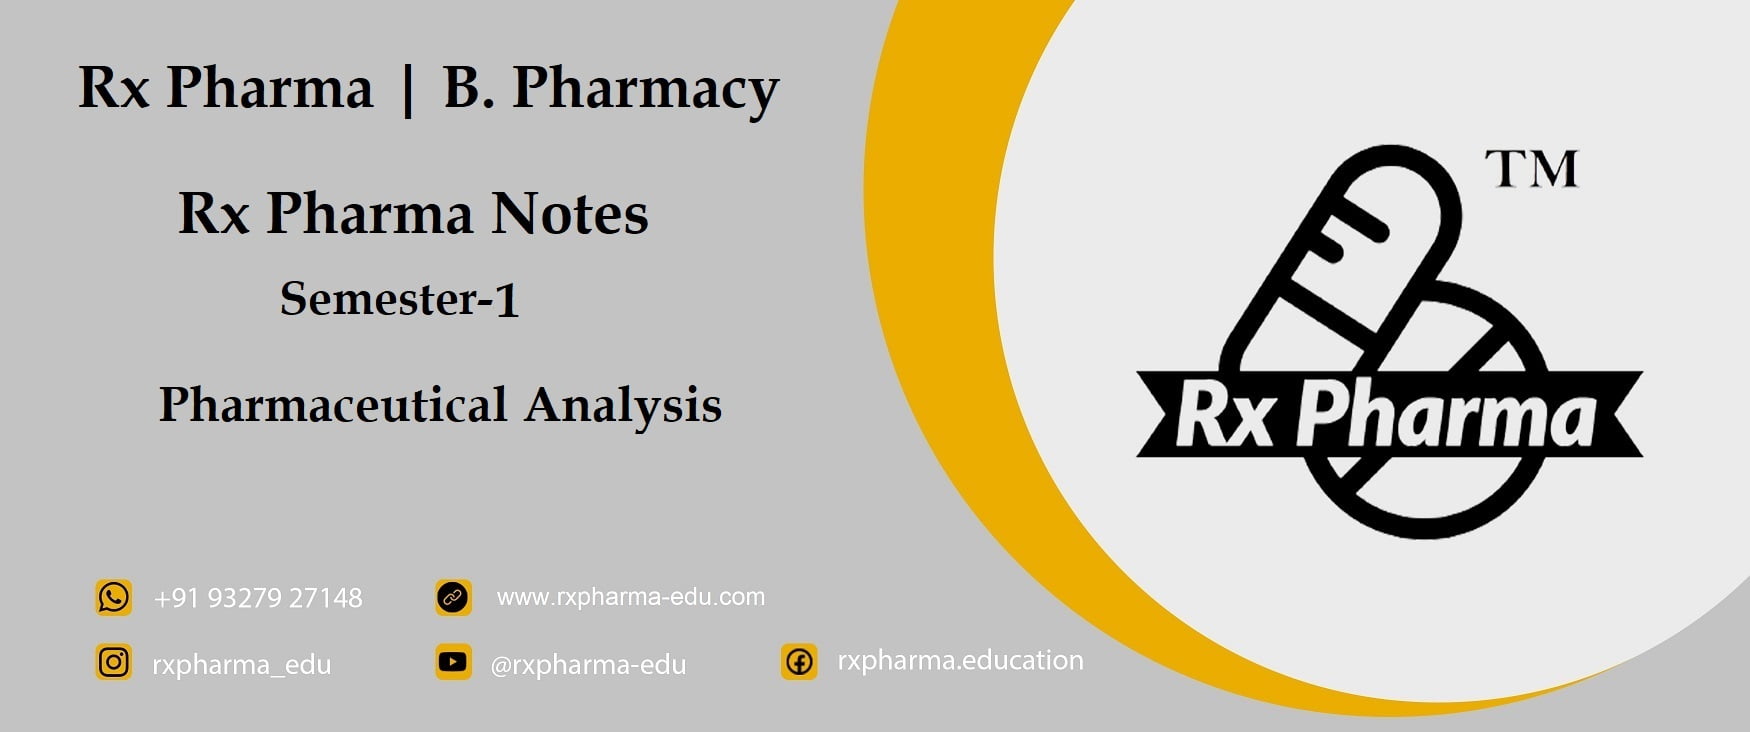 Pharmaceutical Analysis Notes Banner